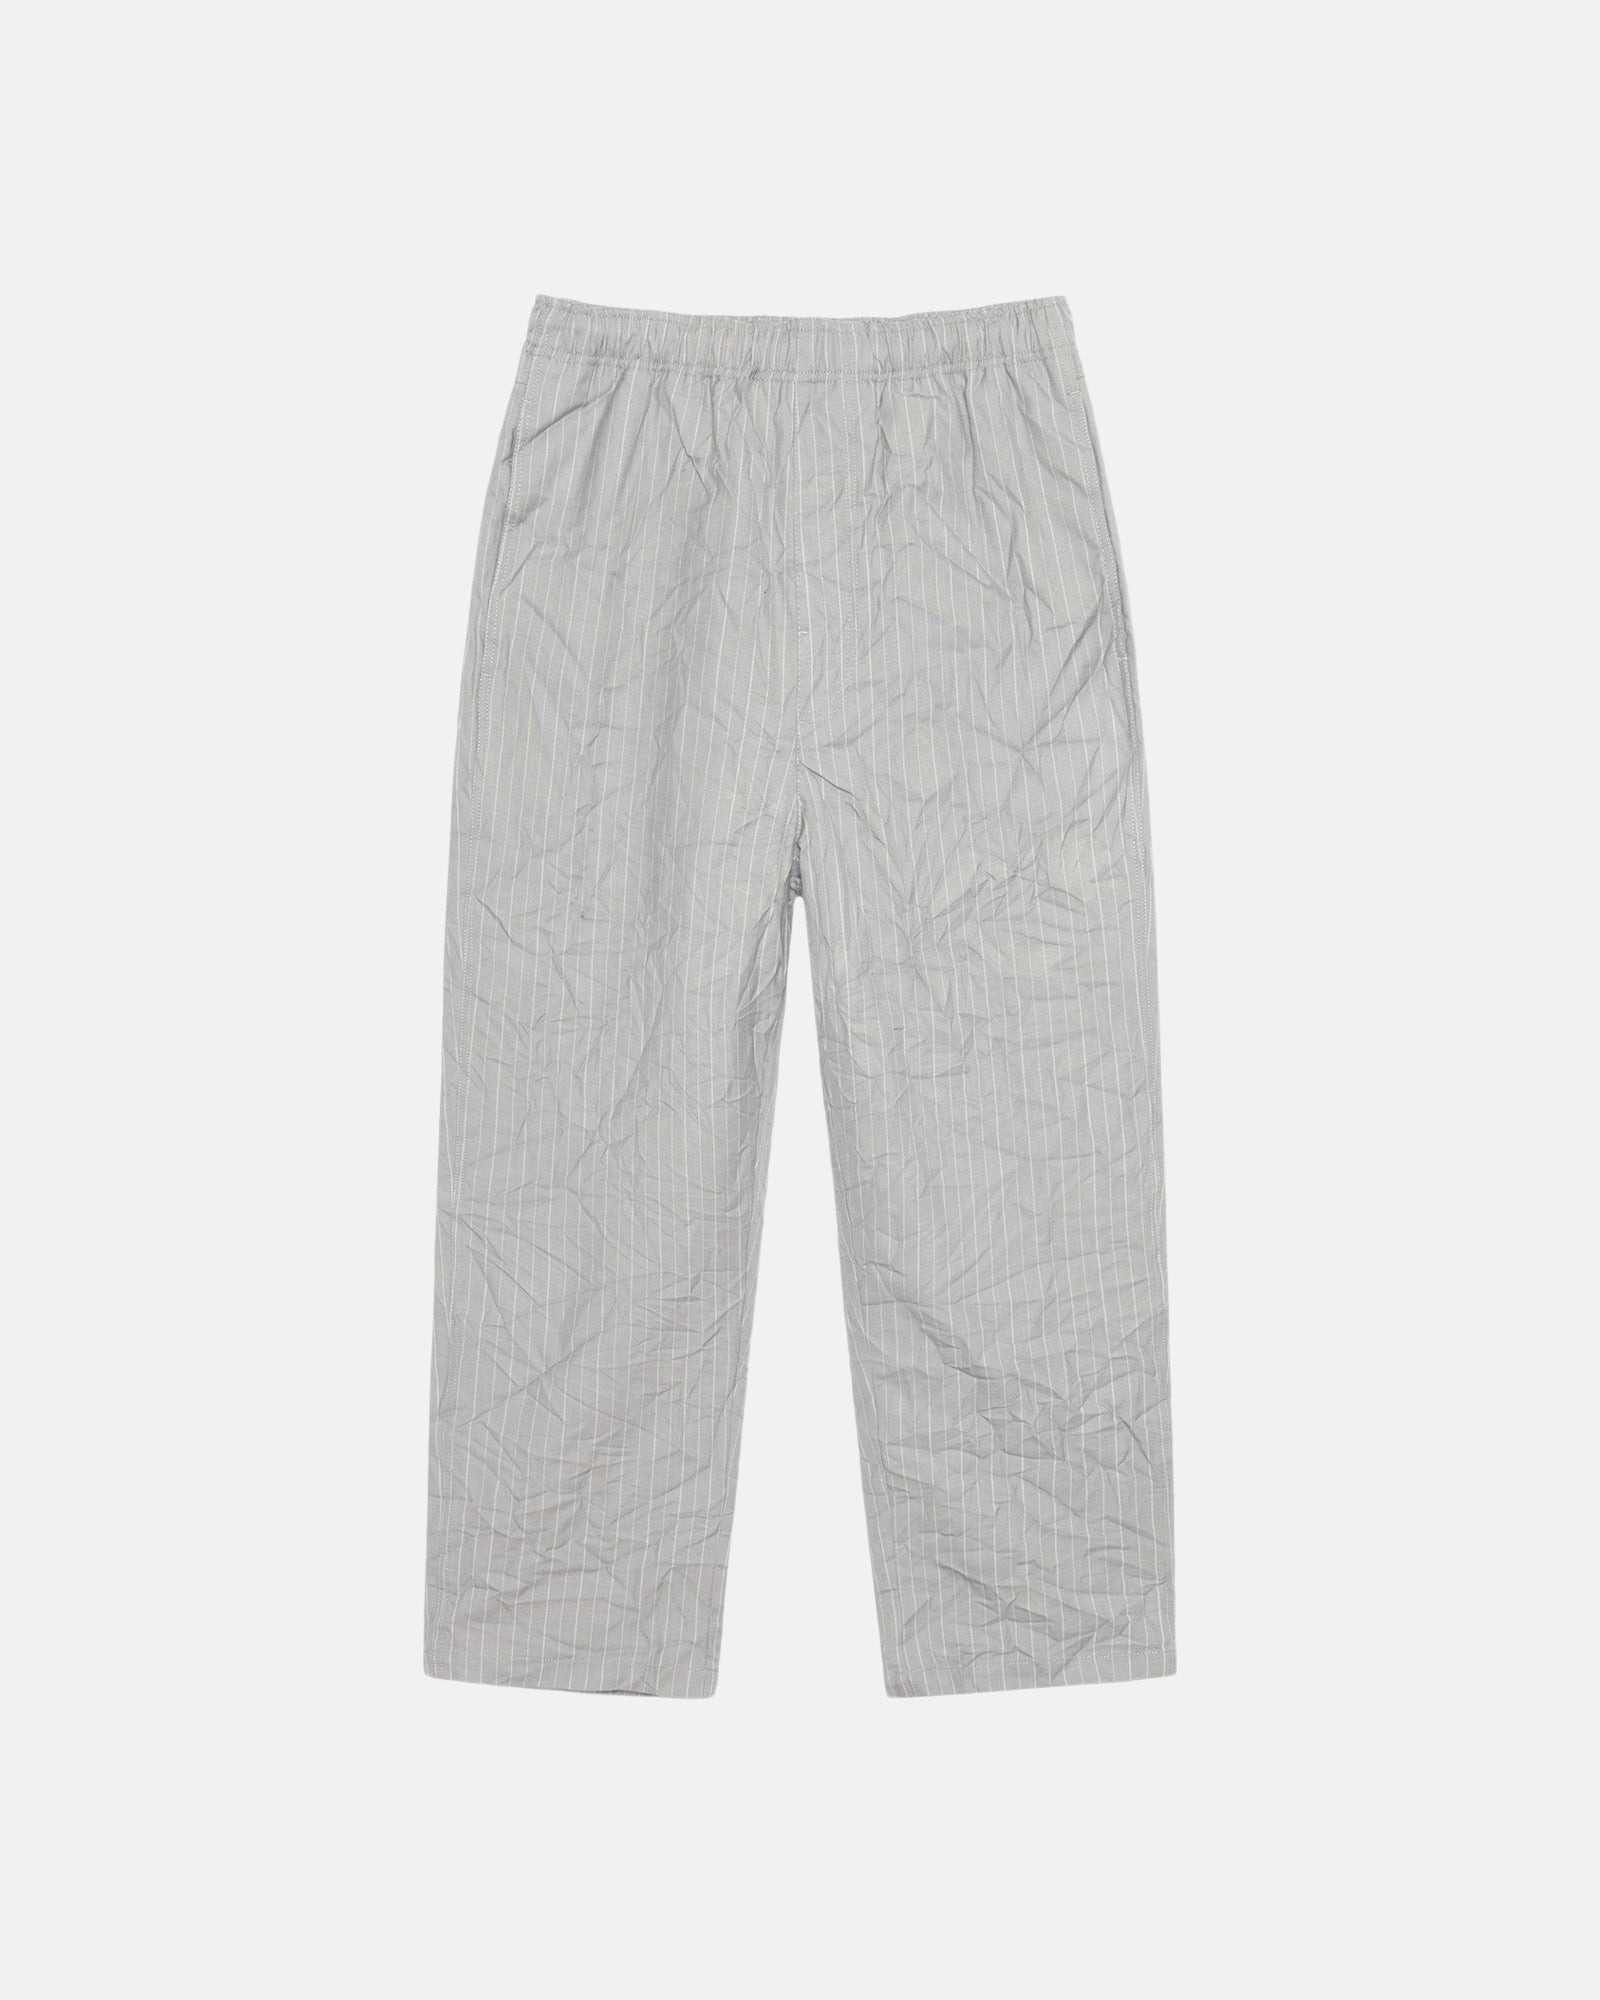 Stüssy Beach Pant Wrinkled Stripe Grey Pants